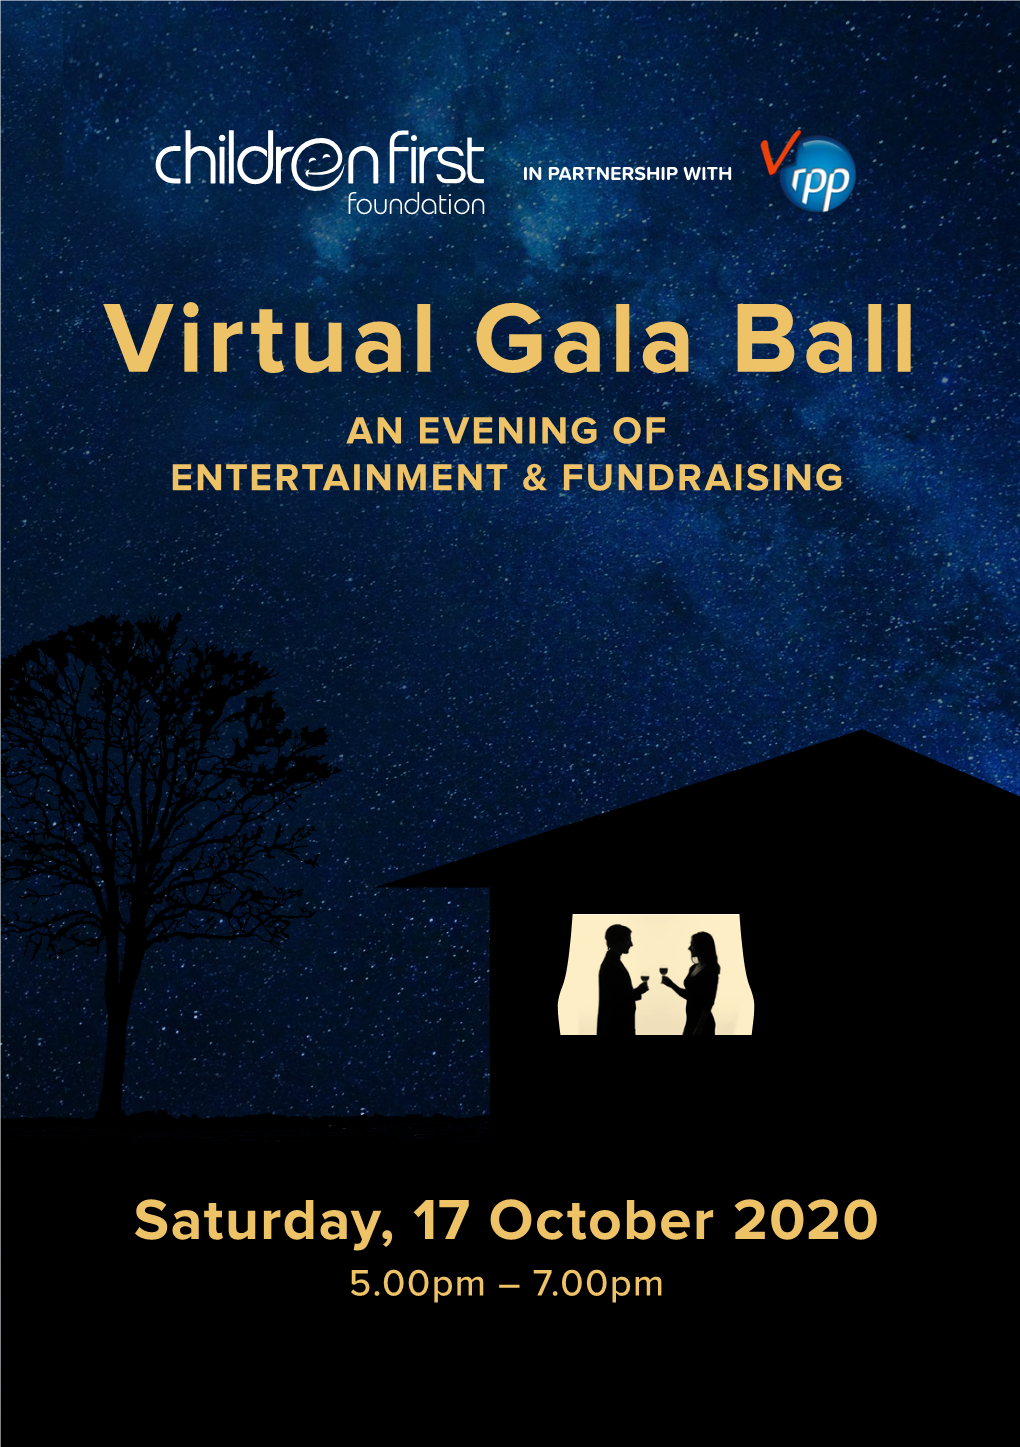 Virtual Gala Ball an EVENING of ENTERTAINMENT & FUNDRAISING